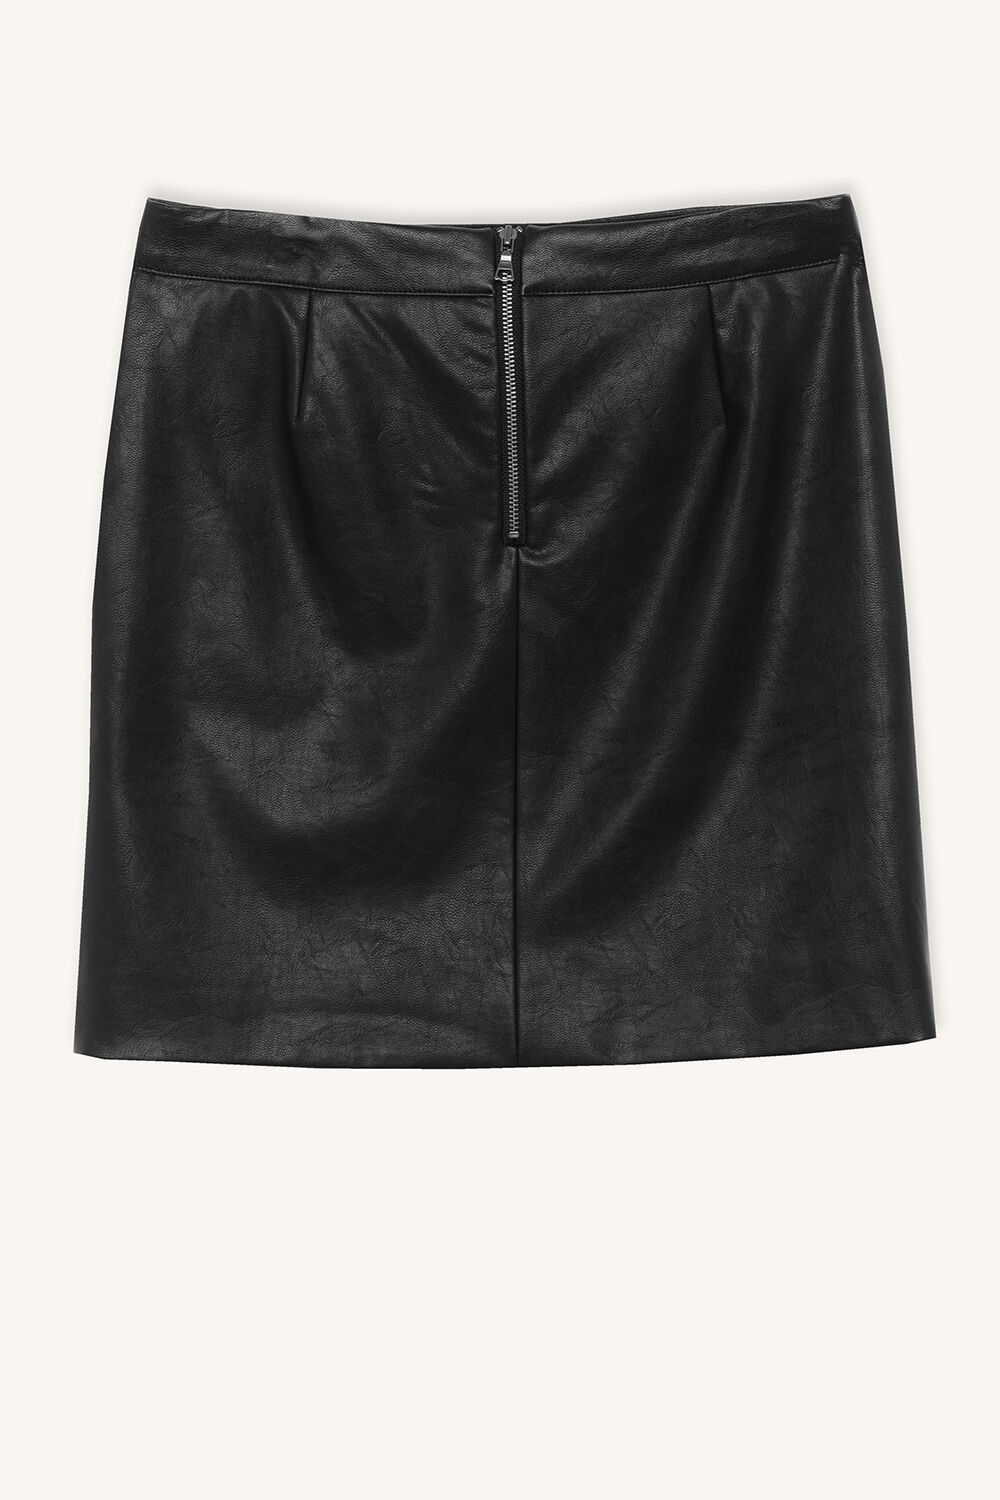 Tween Girl Alexis Vegan Leather Skirt in Black